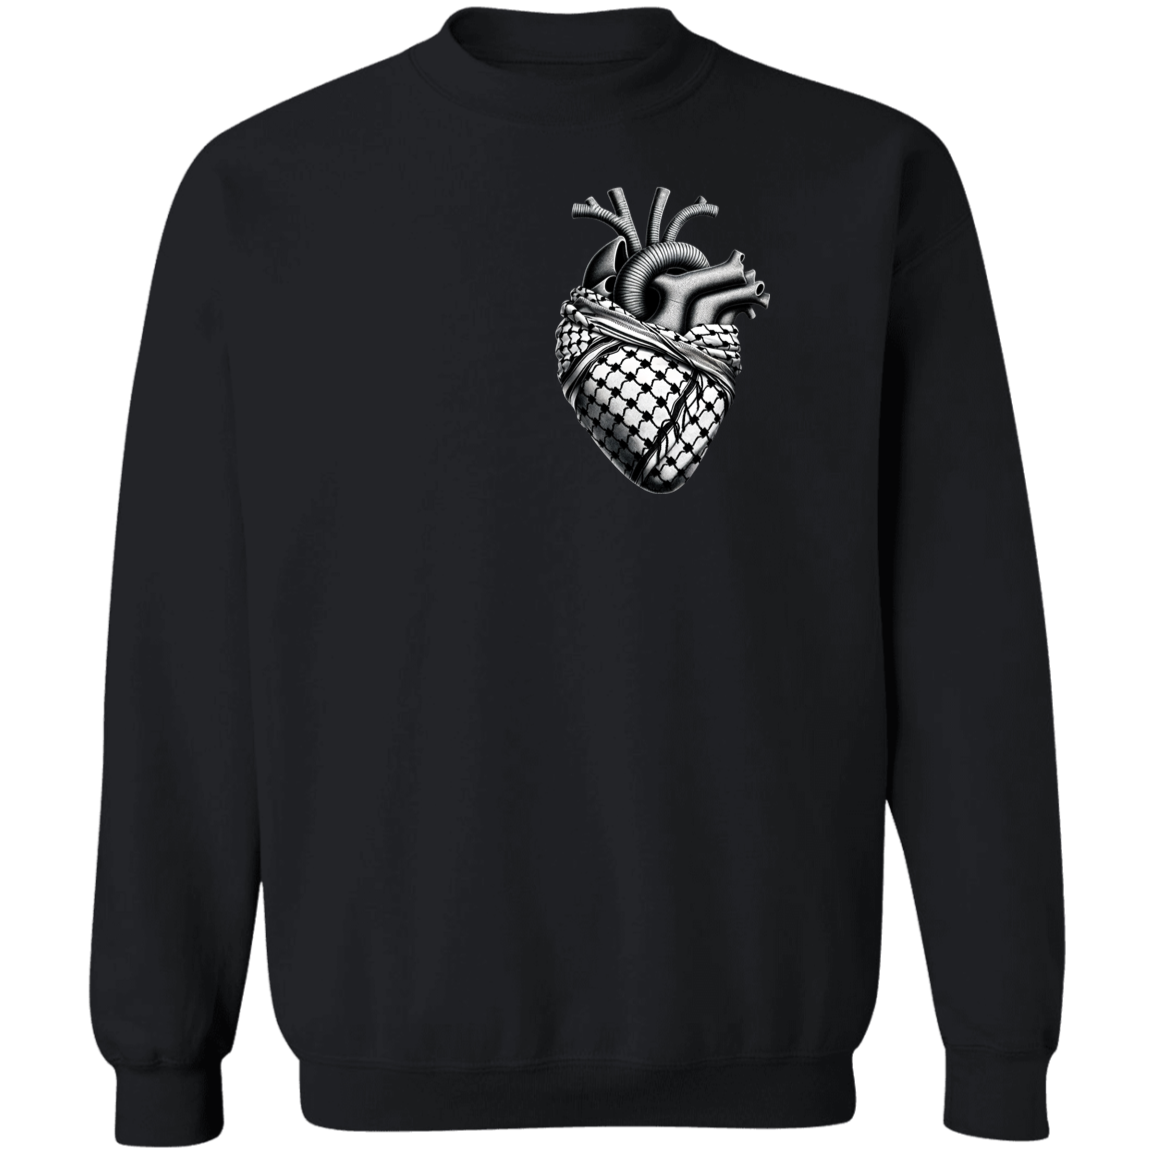 Anatomical Heart Wrapped In Keffiyeh Scarf Sweatshirt